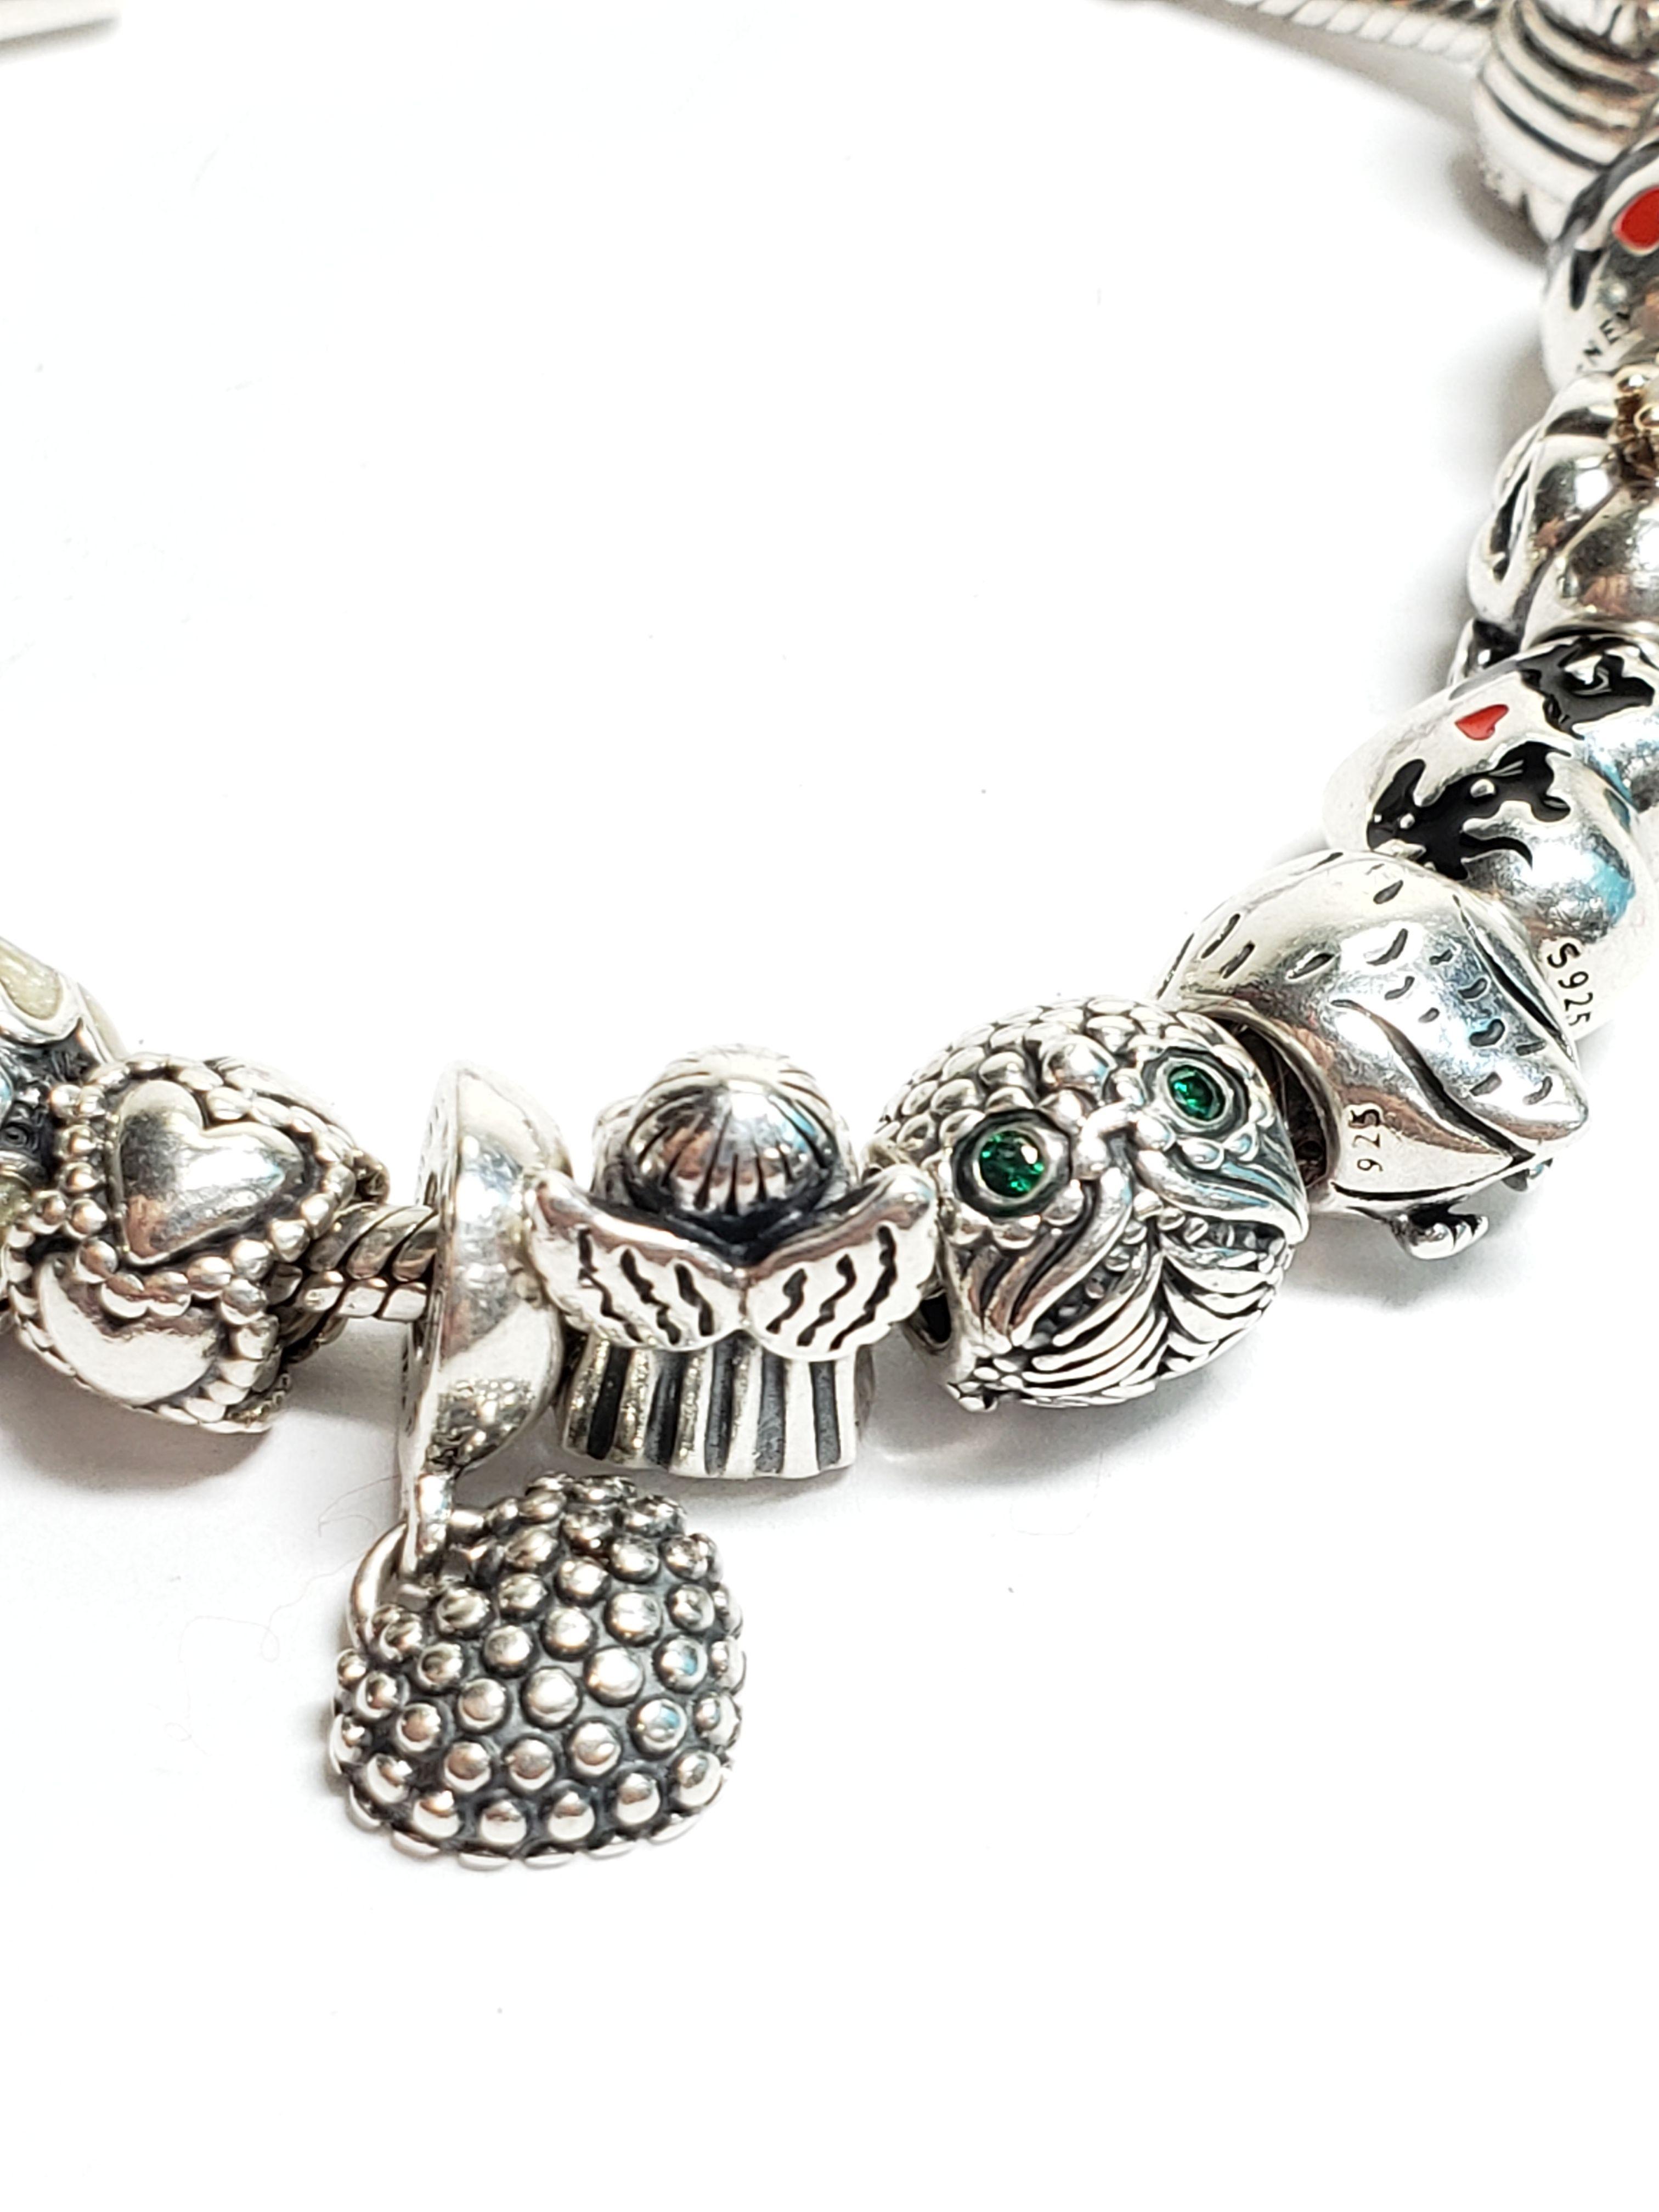 Original Pandora Disney Owl Silver 925 14k 19 Charm Bracelet